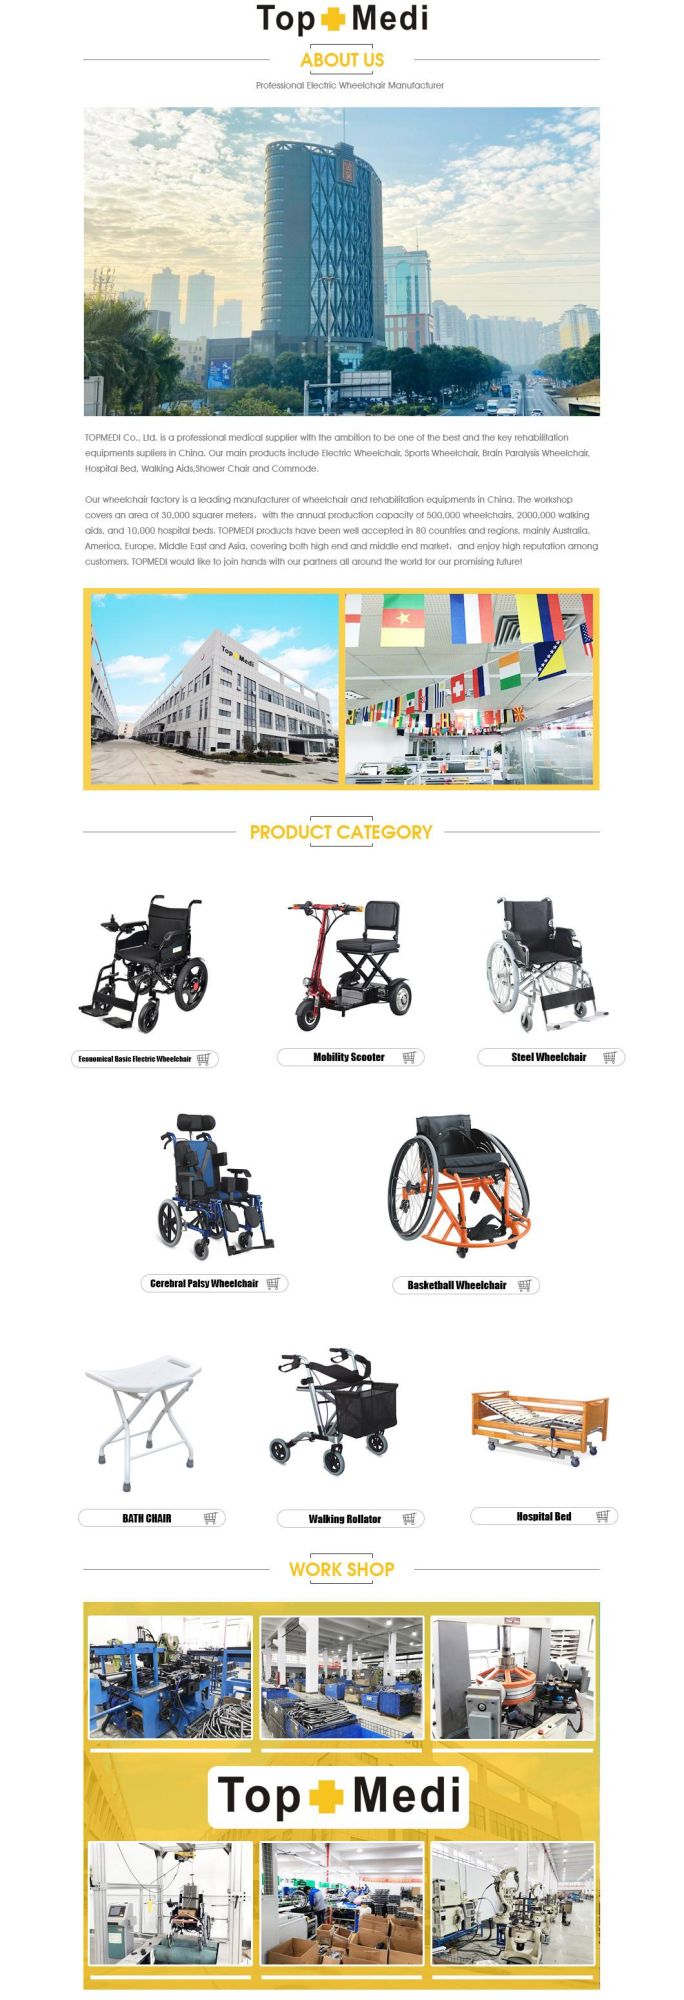 ISO Approved Leisure Sports Topmedi China Folding Wheel Chair Wheelchair Tls725lq